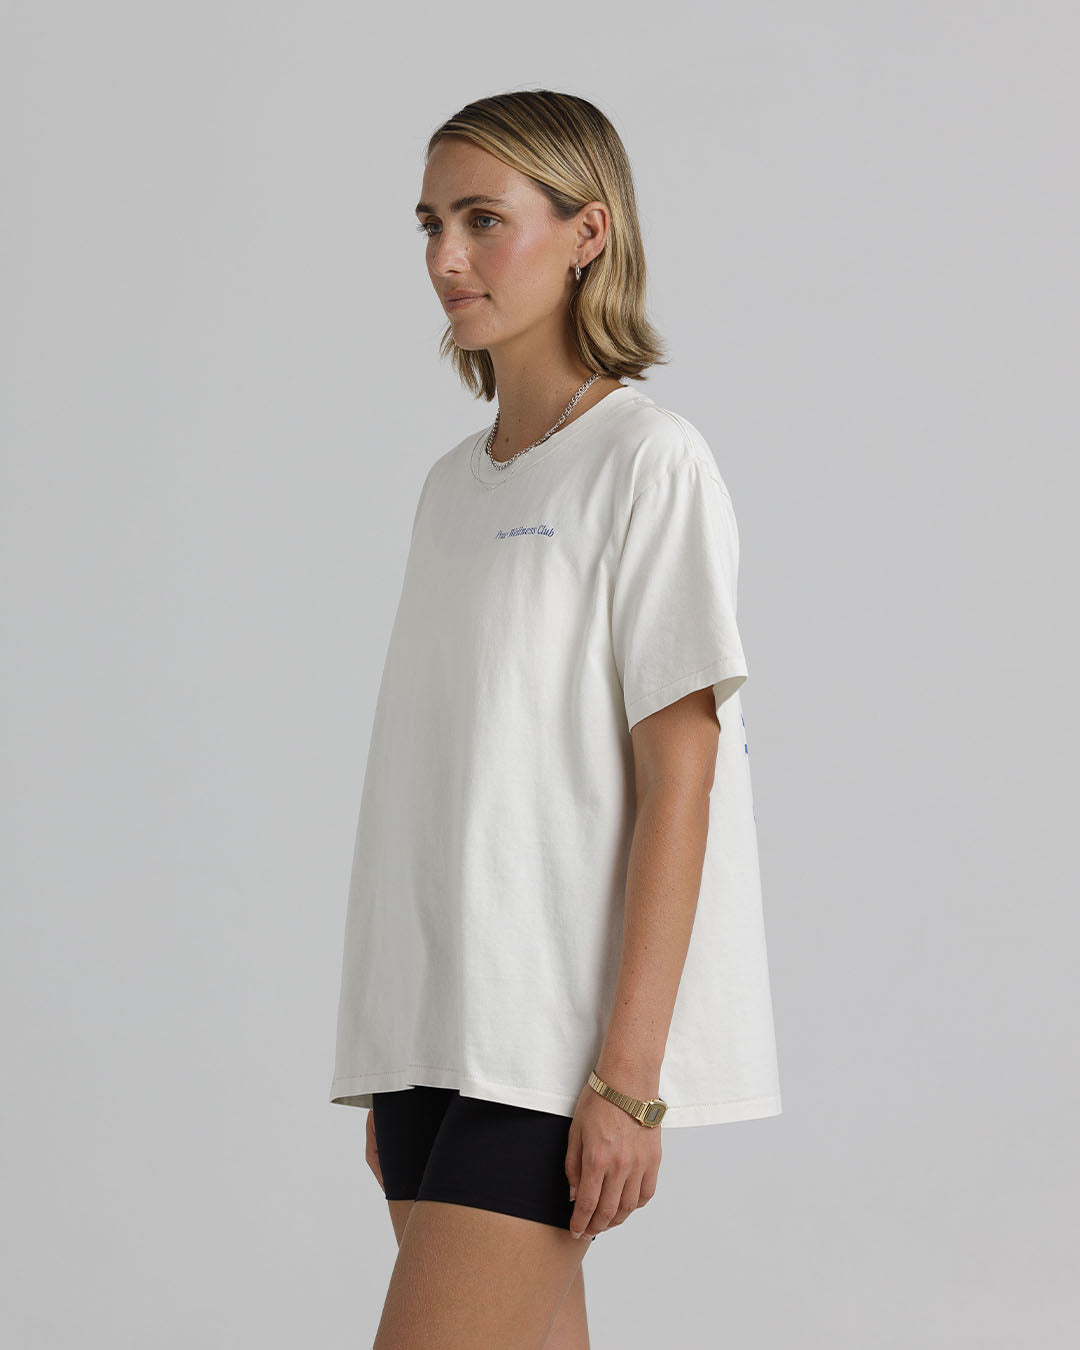 Move Mindfully T-Shirt – Cream / Royal Blue Tees by Prae Wellness - Prae Store